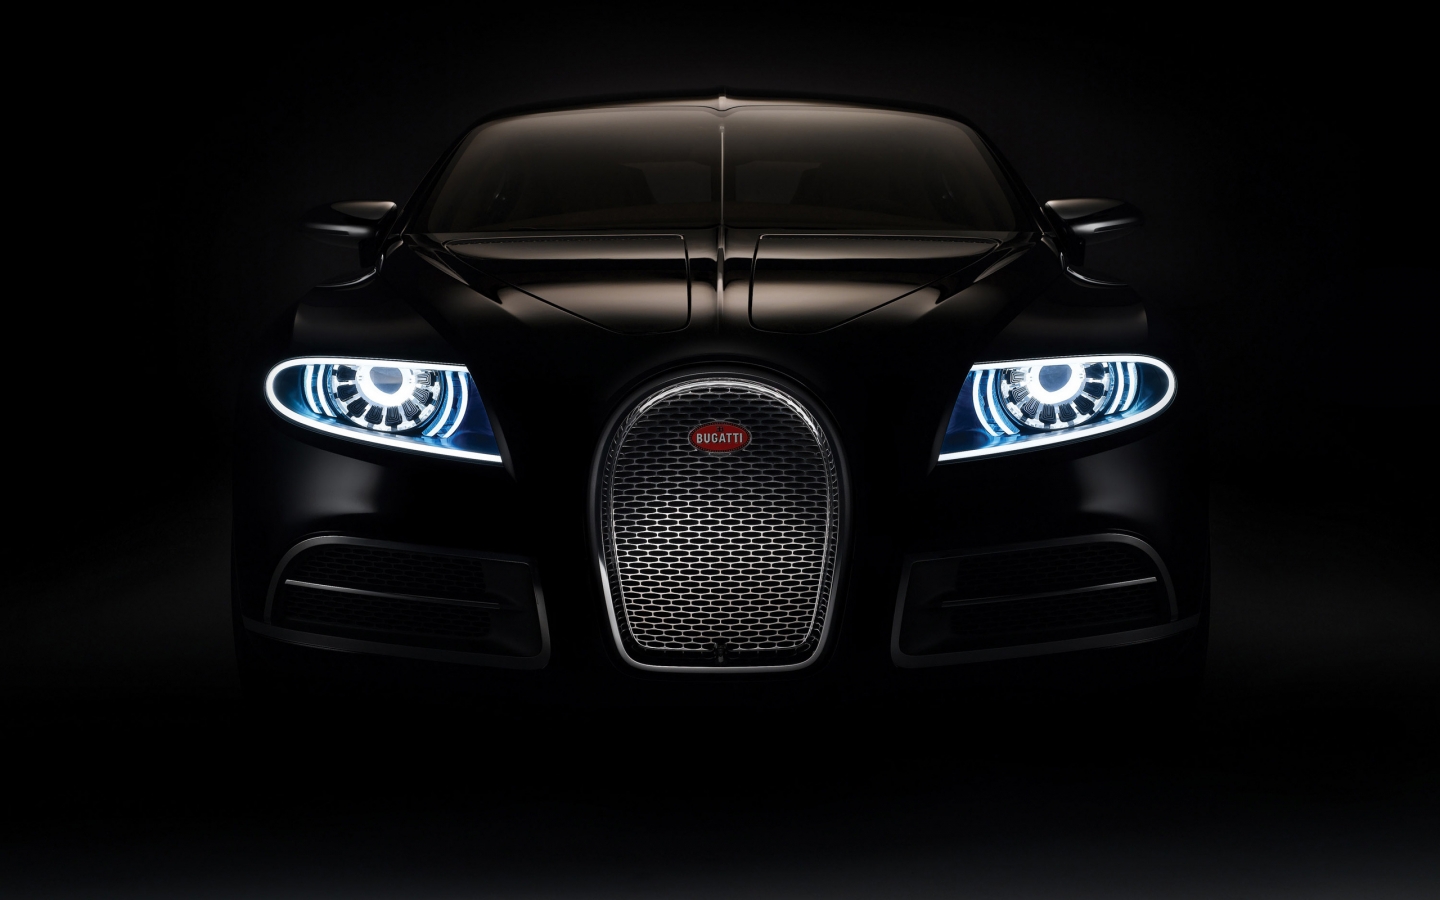 Bugatti 16C Galibier Front for 1440 x 900 widescreen resolution